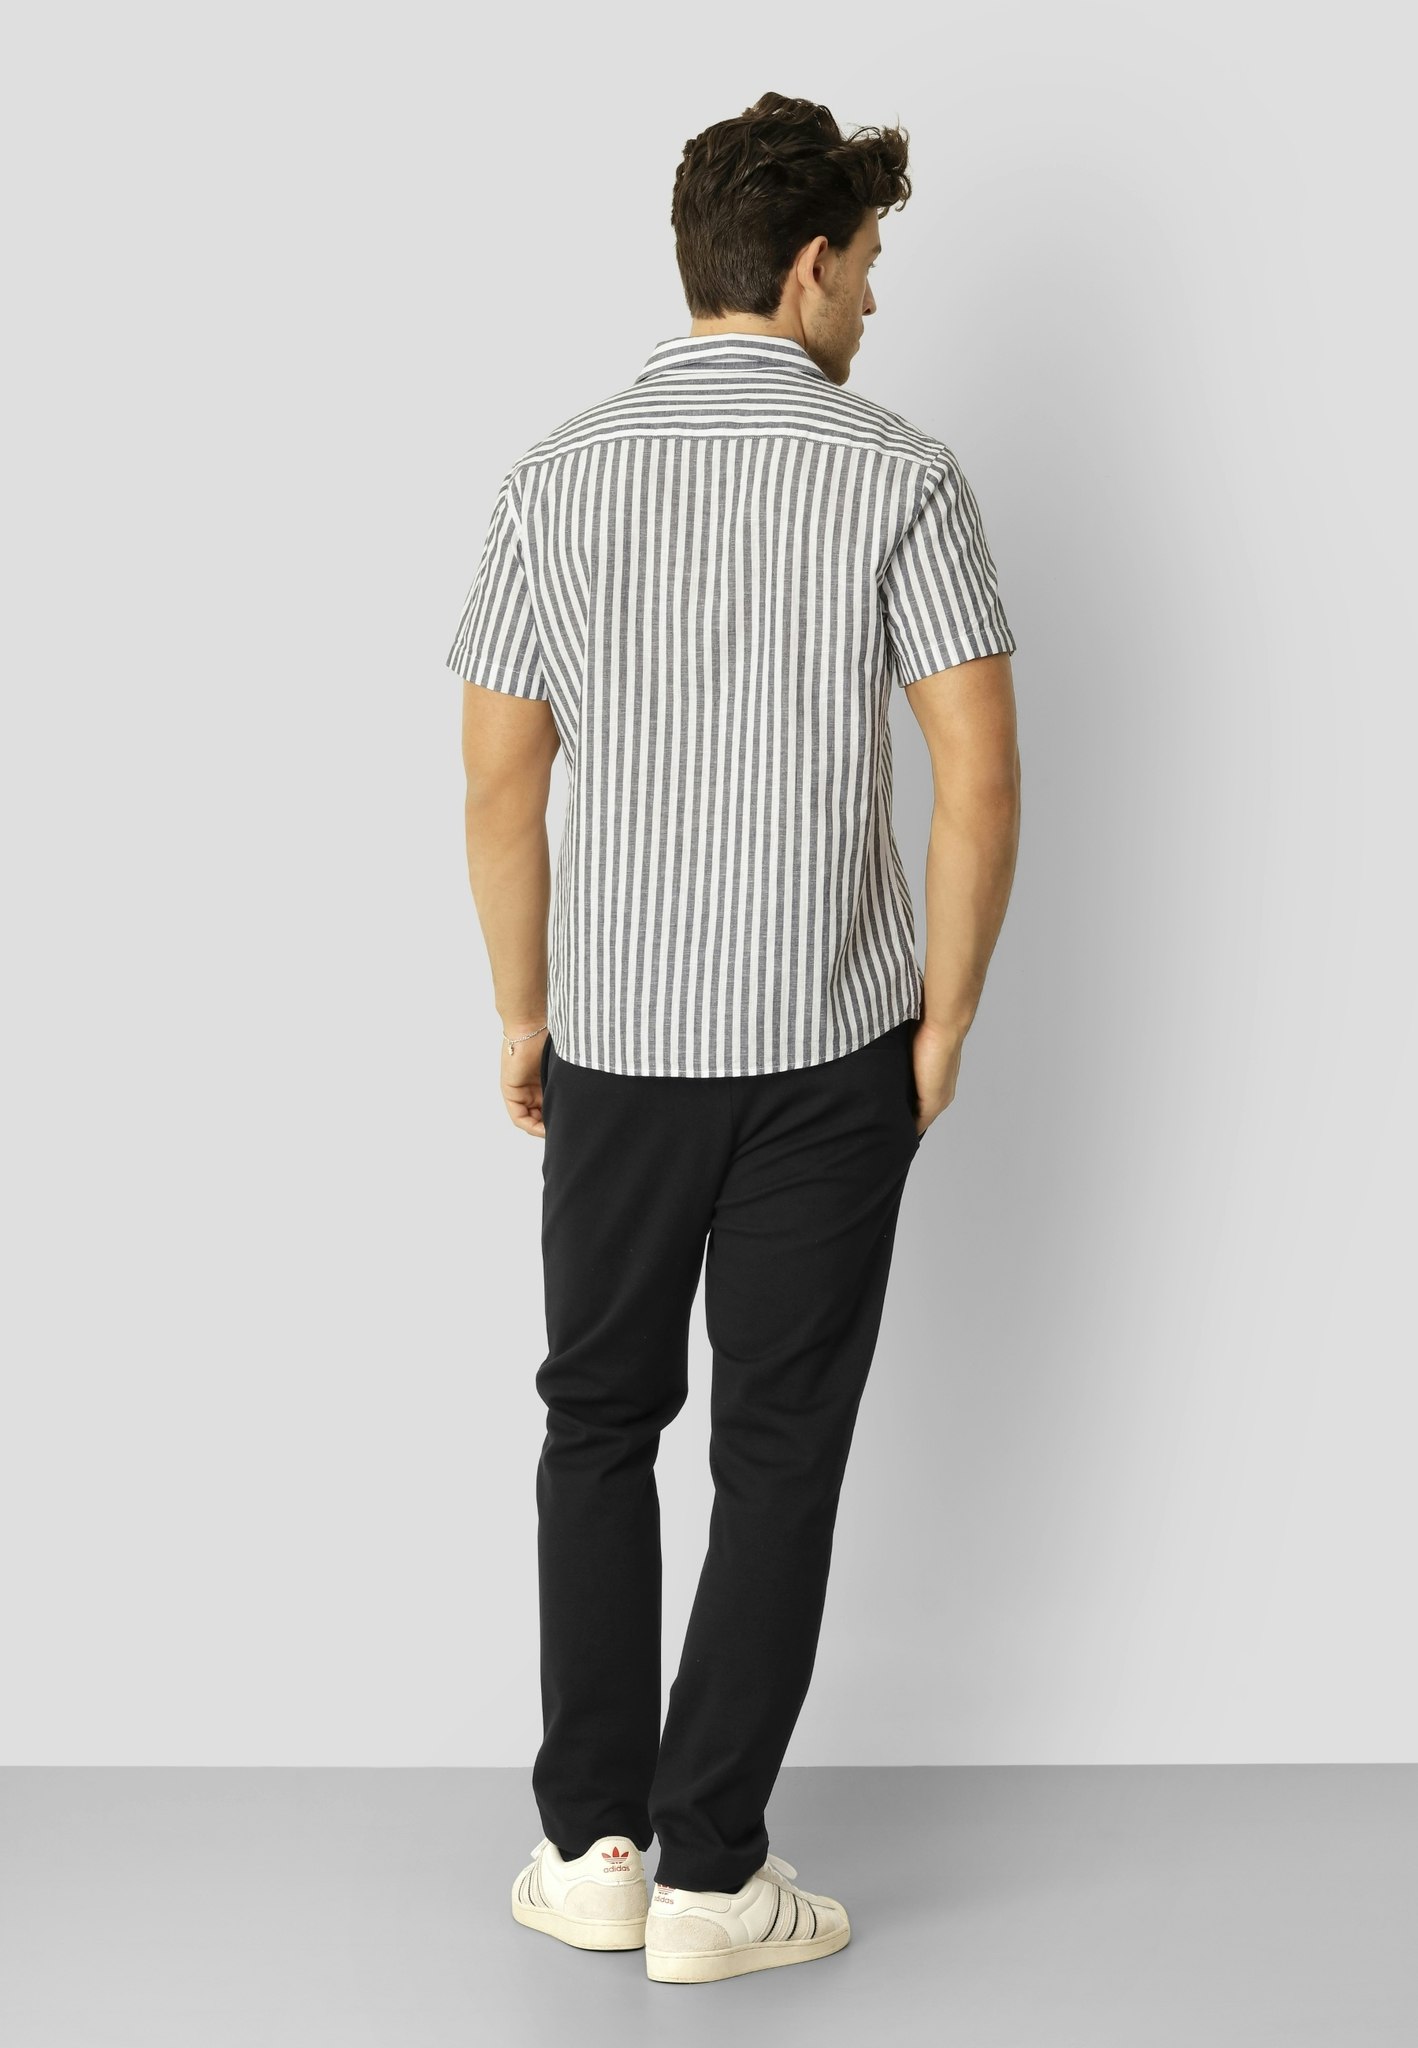 Giles Bowling Striped Shirt S/S - Clean Cut Copenhagen